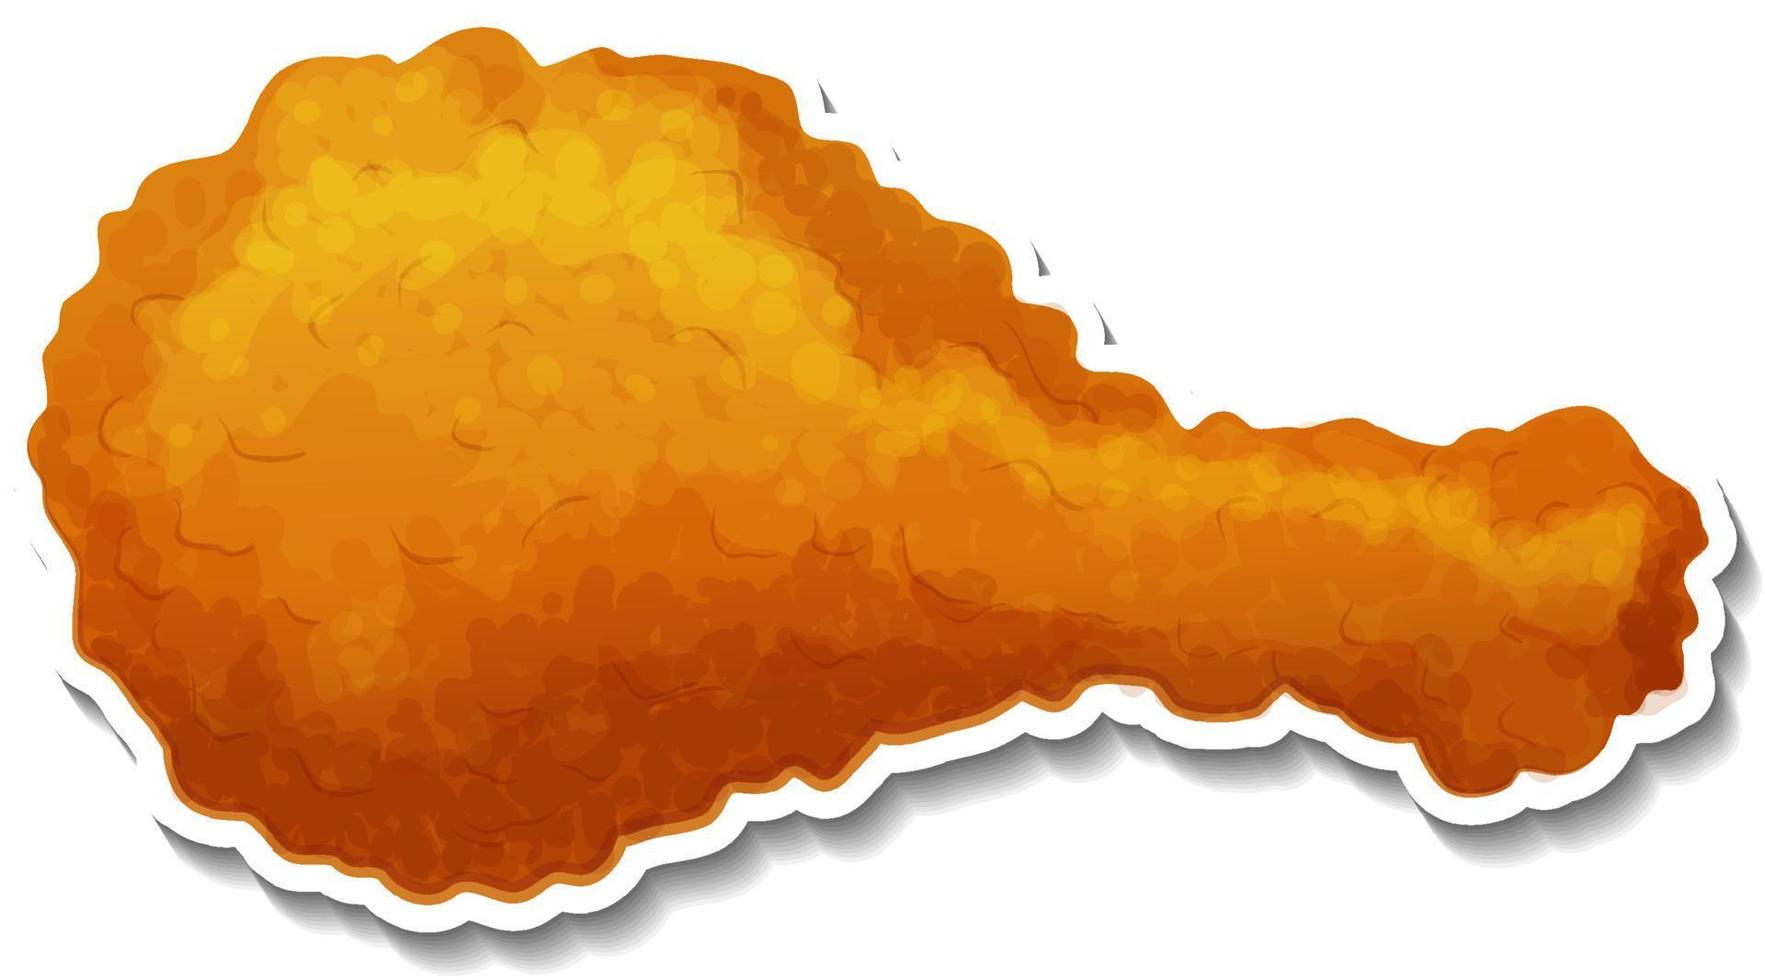 Fried chicken drumstick in cartoon style vector